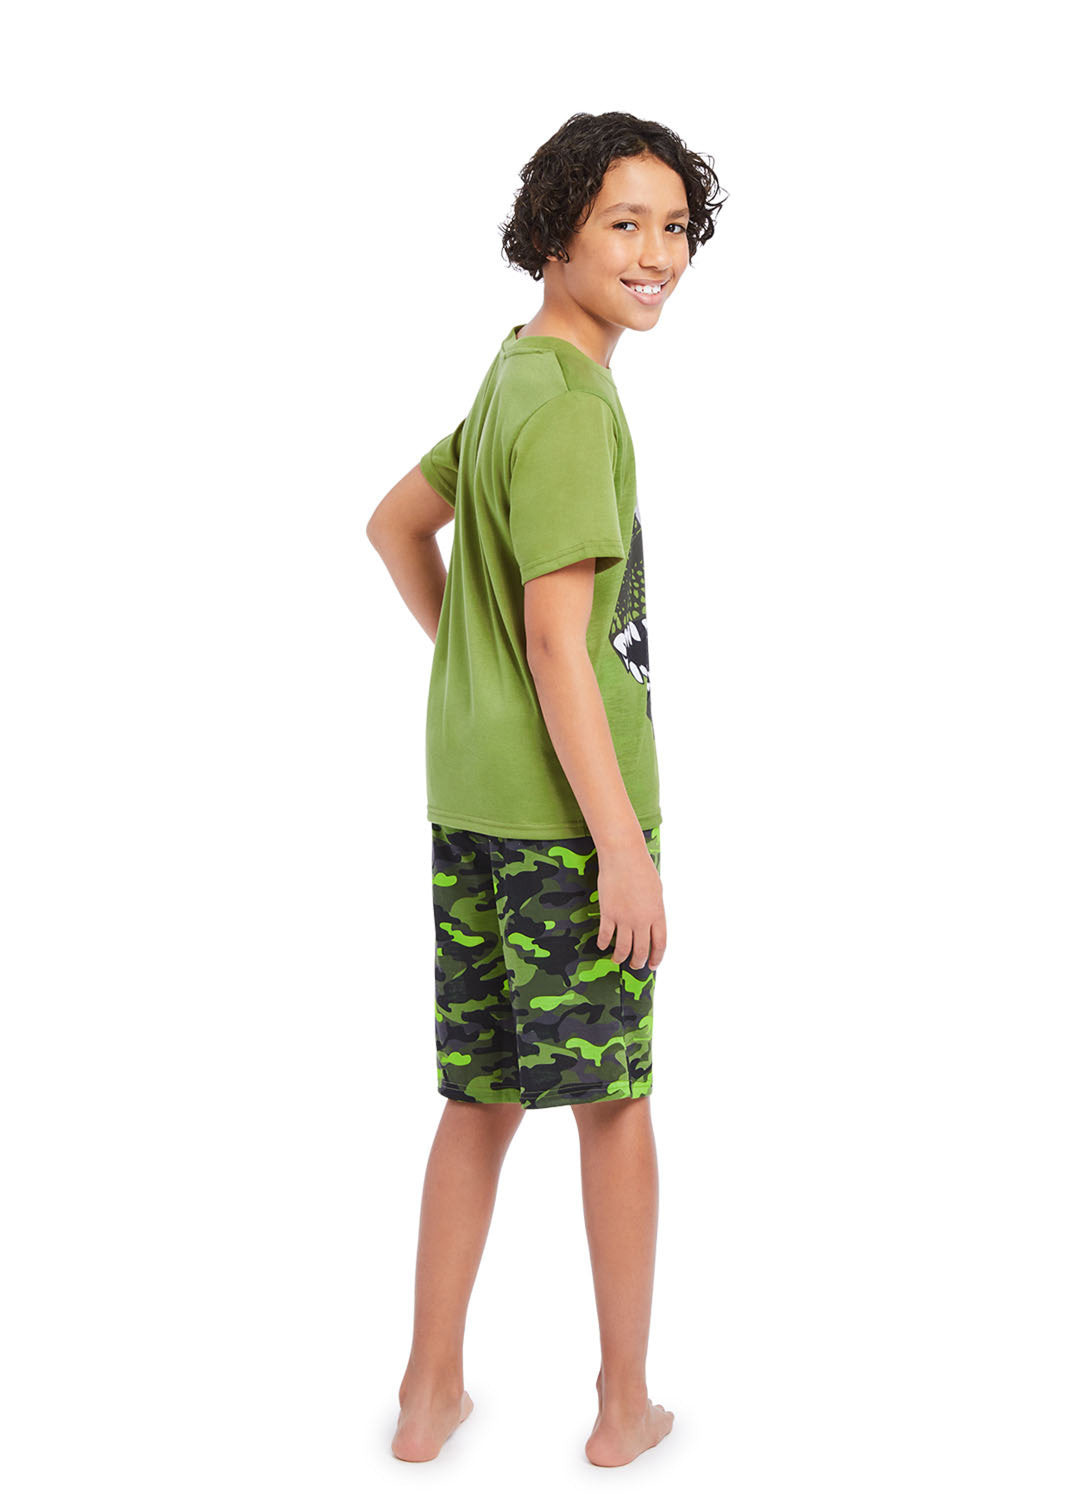 Back view Boy wearing Dino t-shirt print with Camo shorts (green)